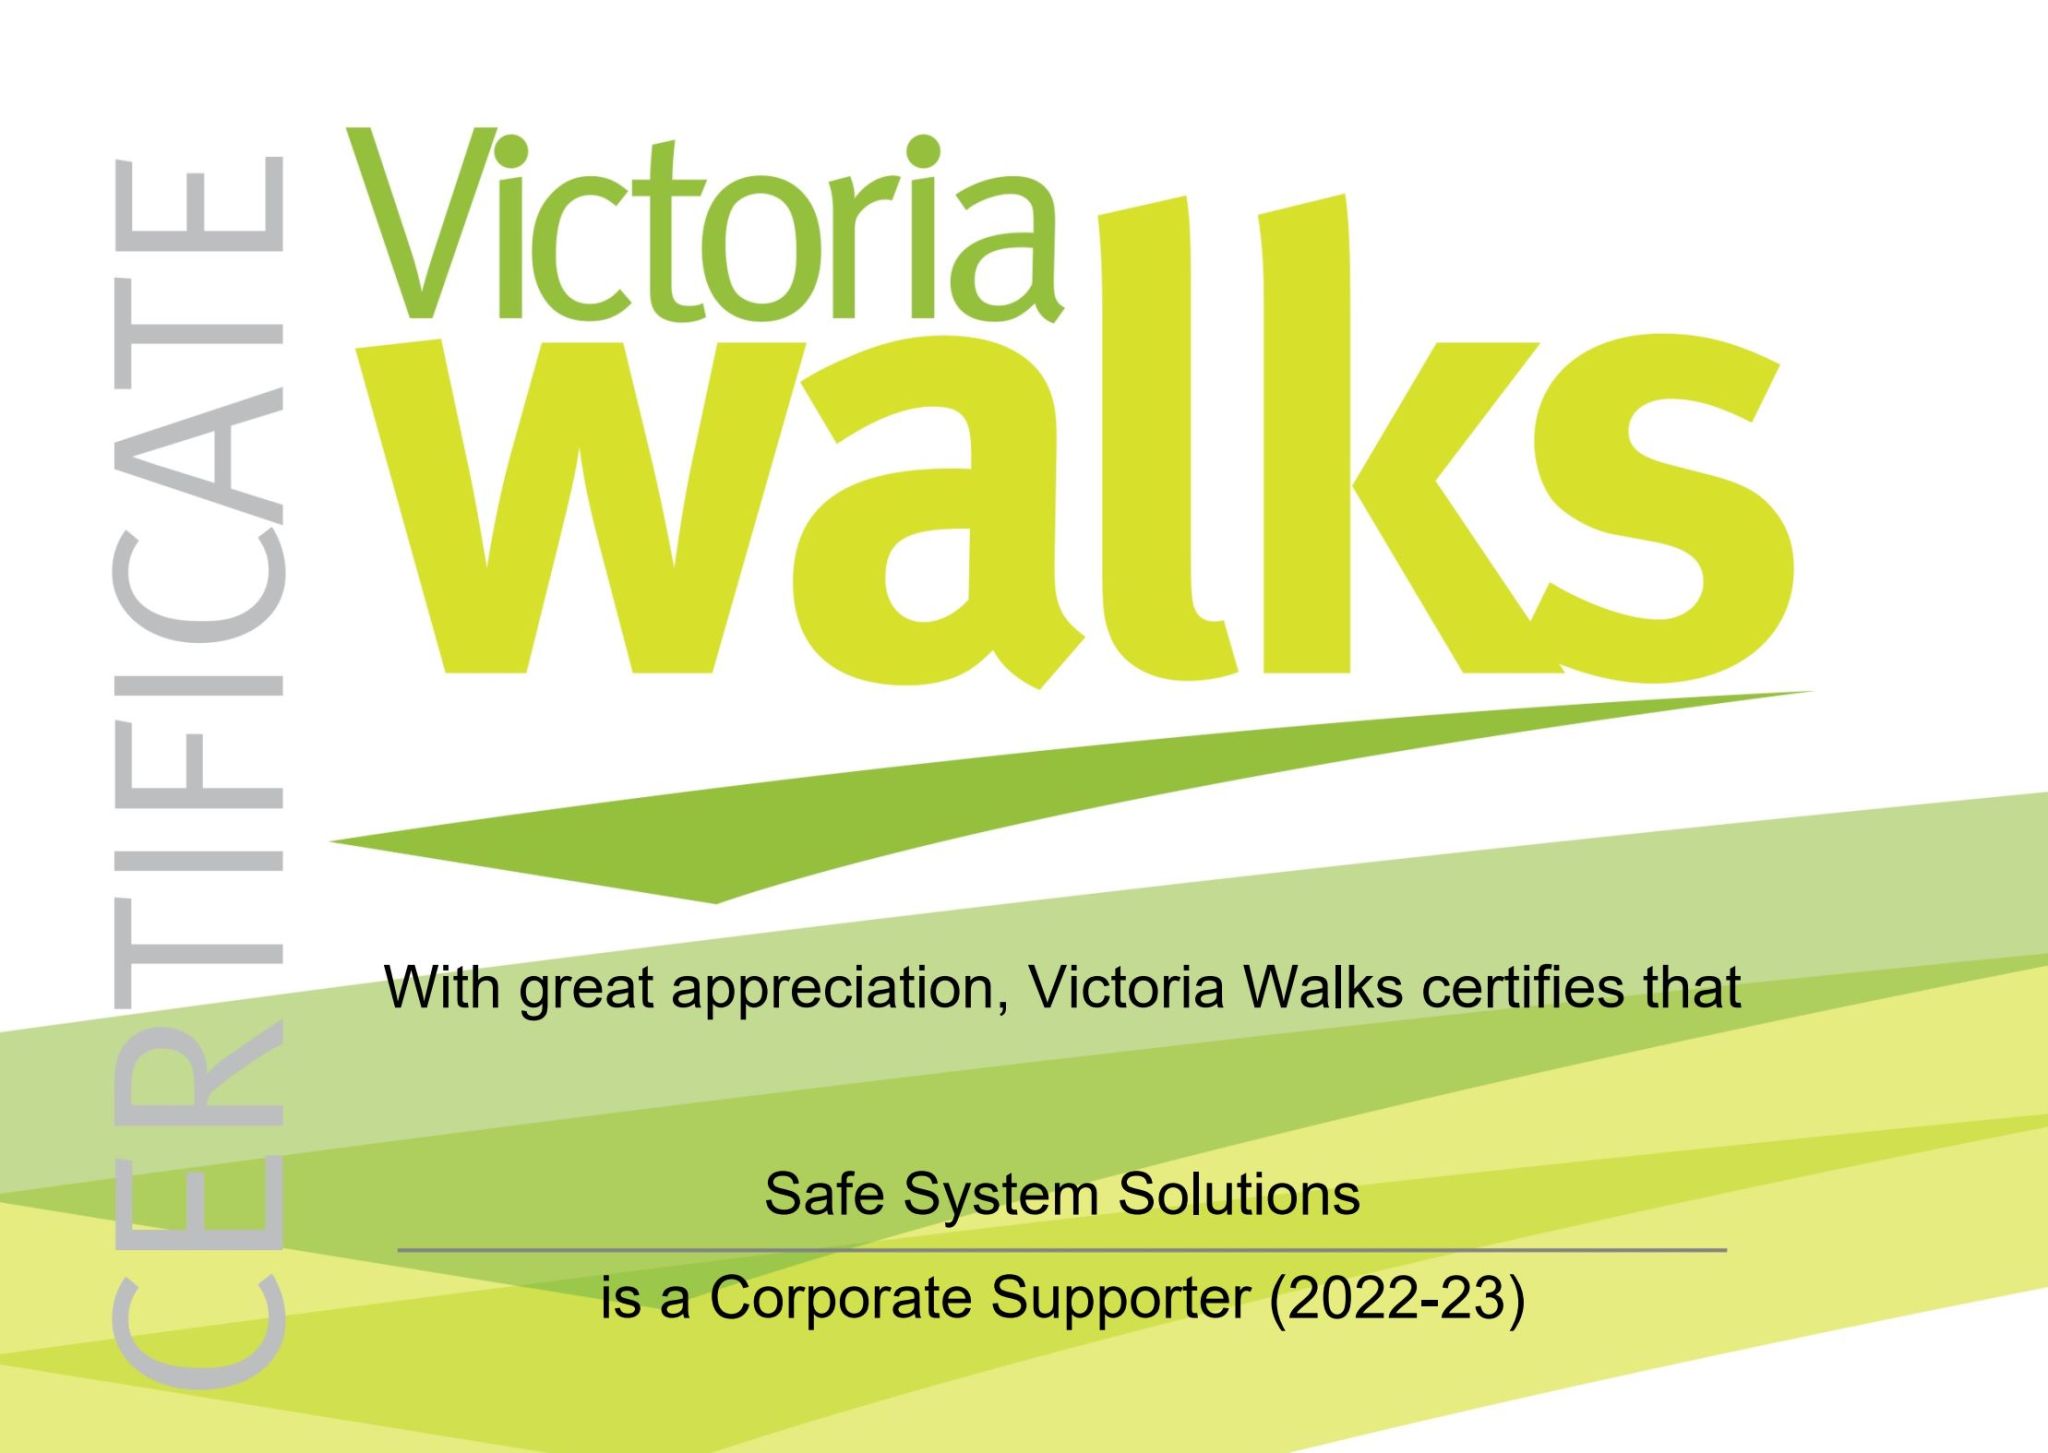 Corporate Supporter of Victoria Walks